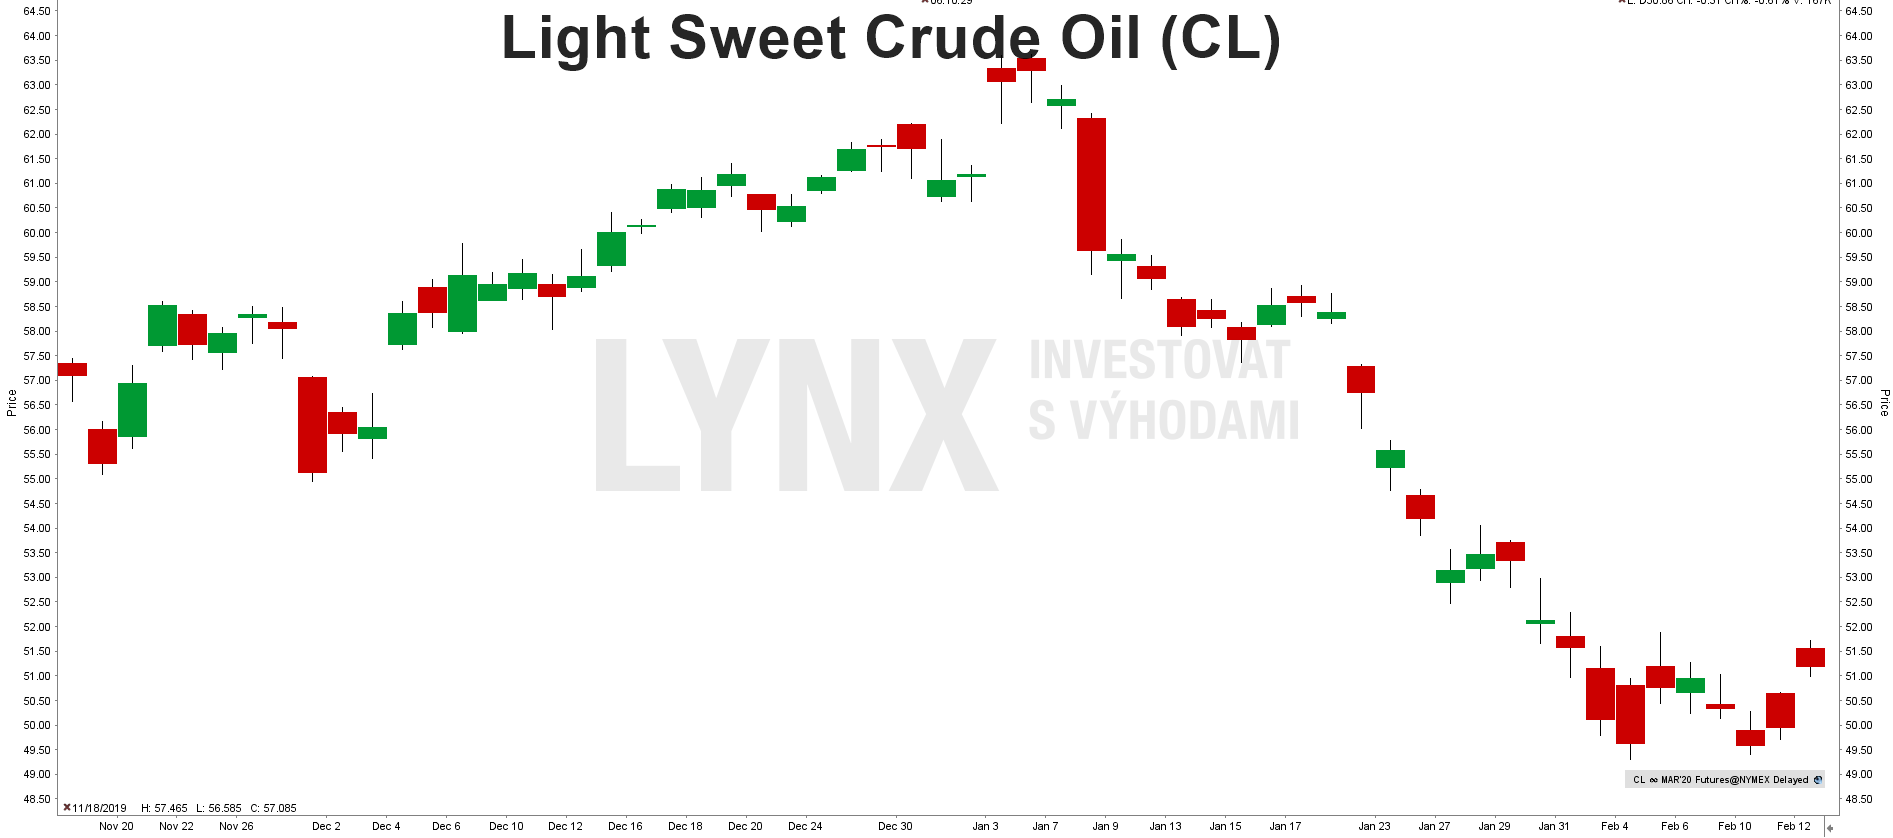 Light Sweet Crude Oil (CL)